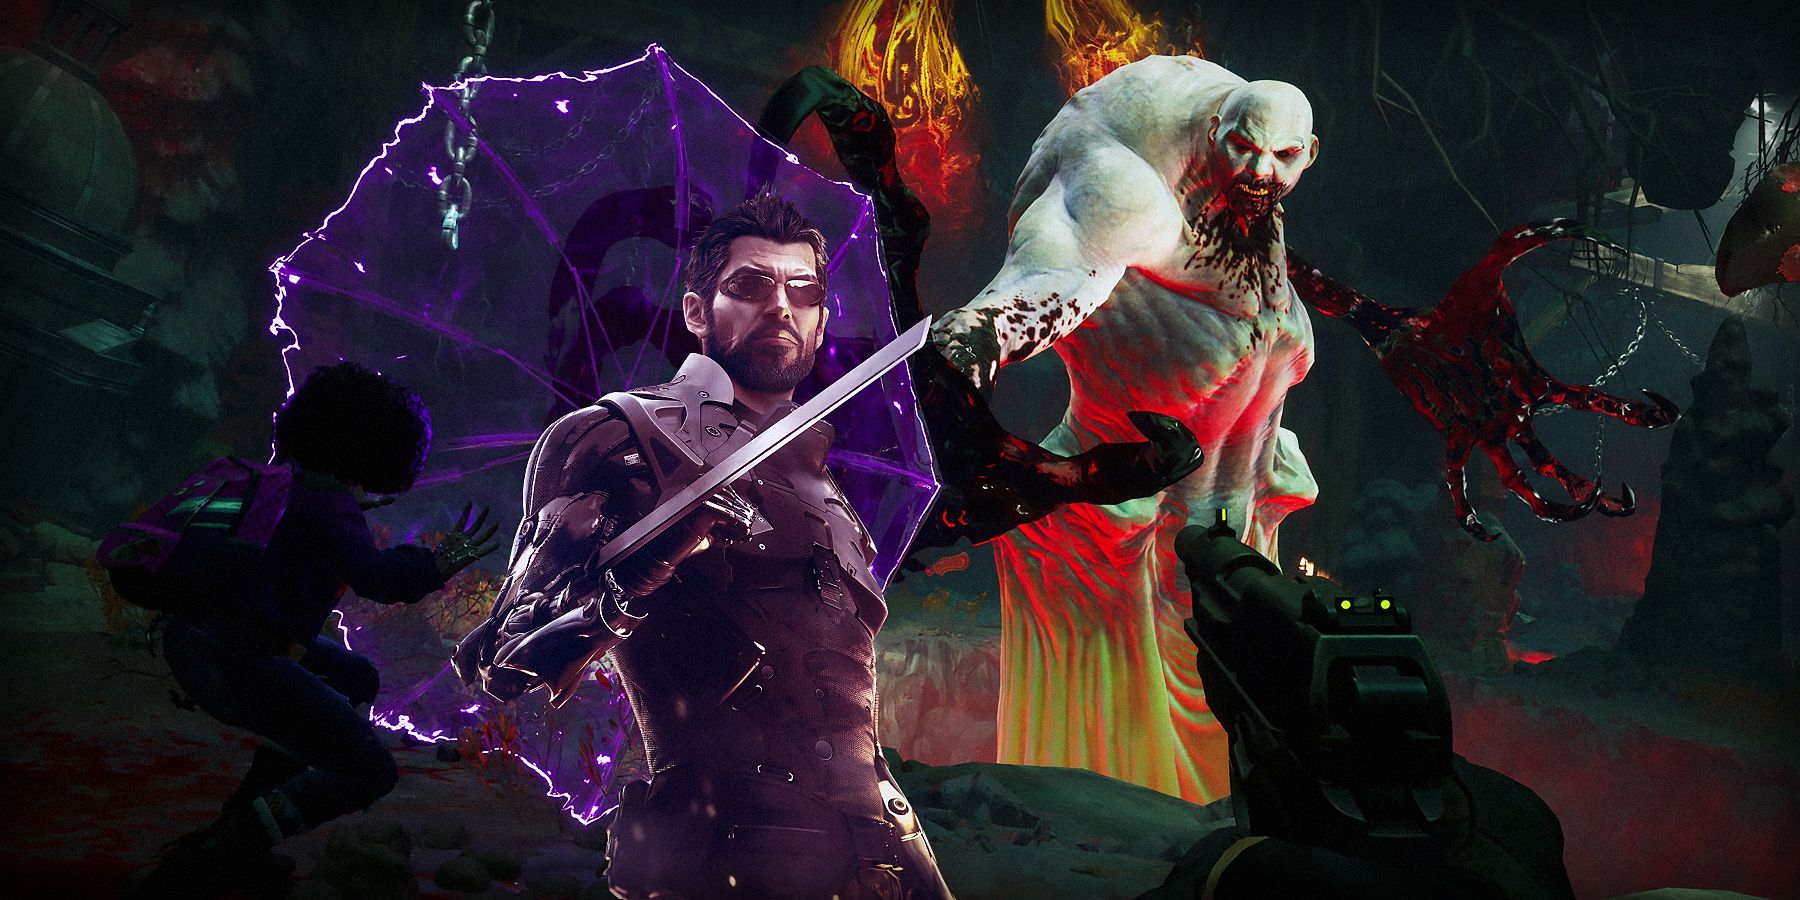 Redfall vampire boss fight, world design has Deus Ex vibes.